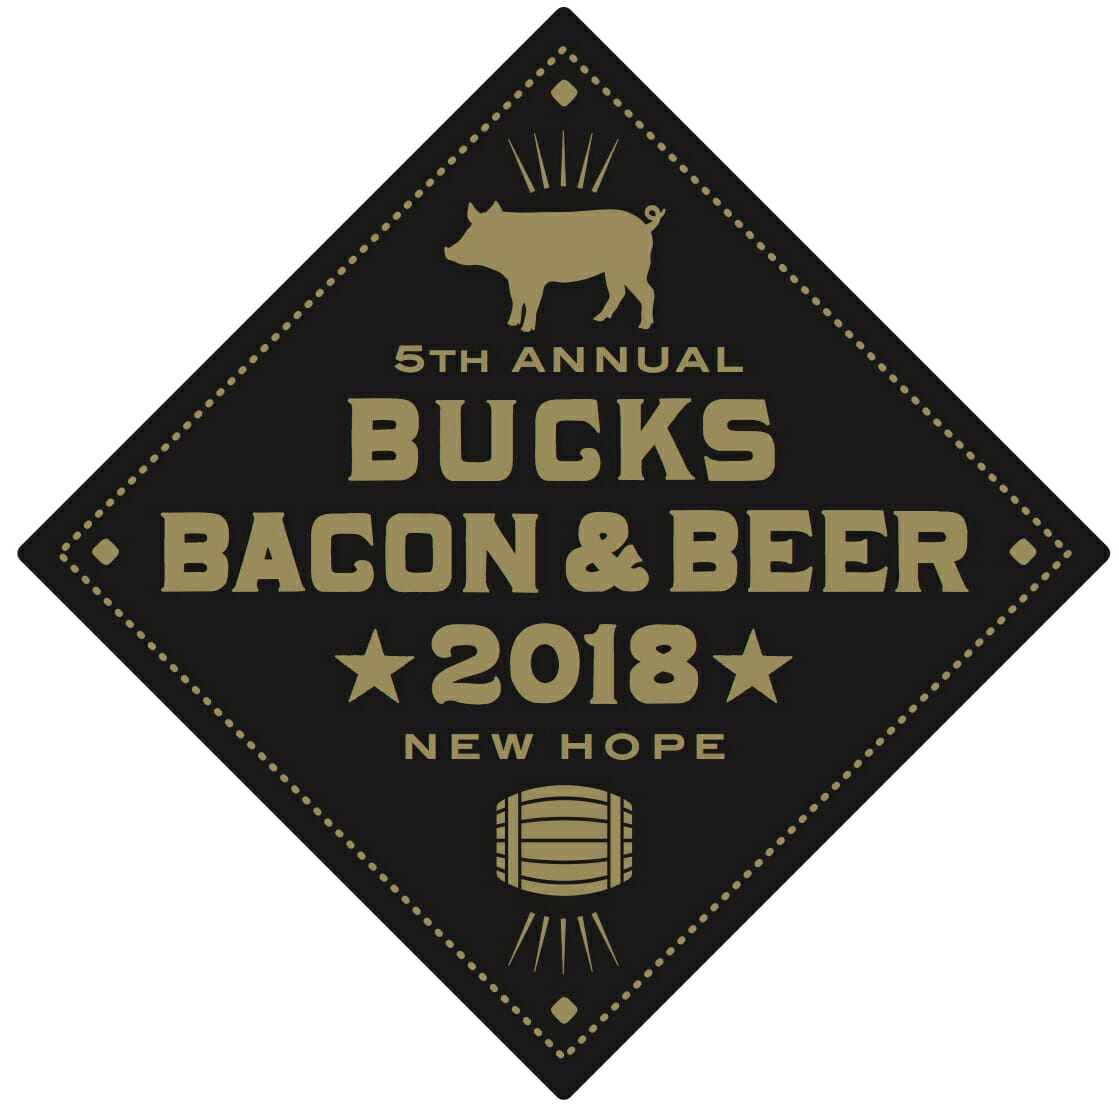 5th Annual Bucks Bacon & Beer